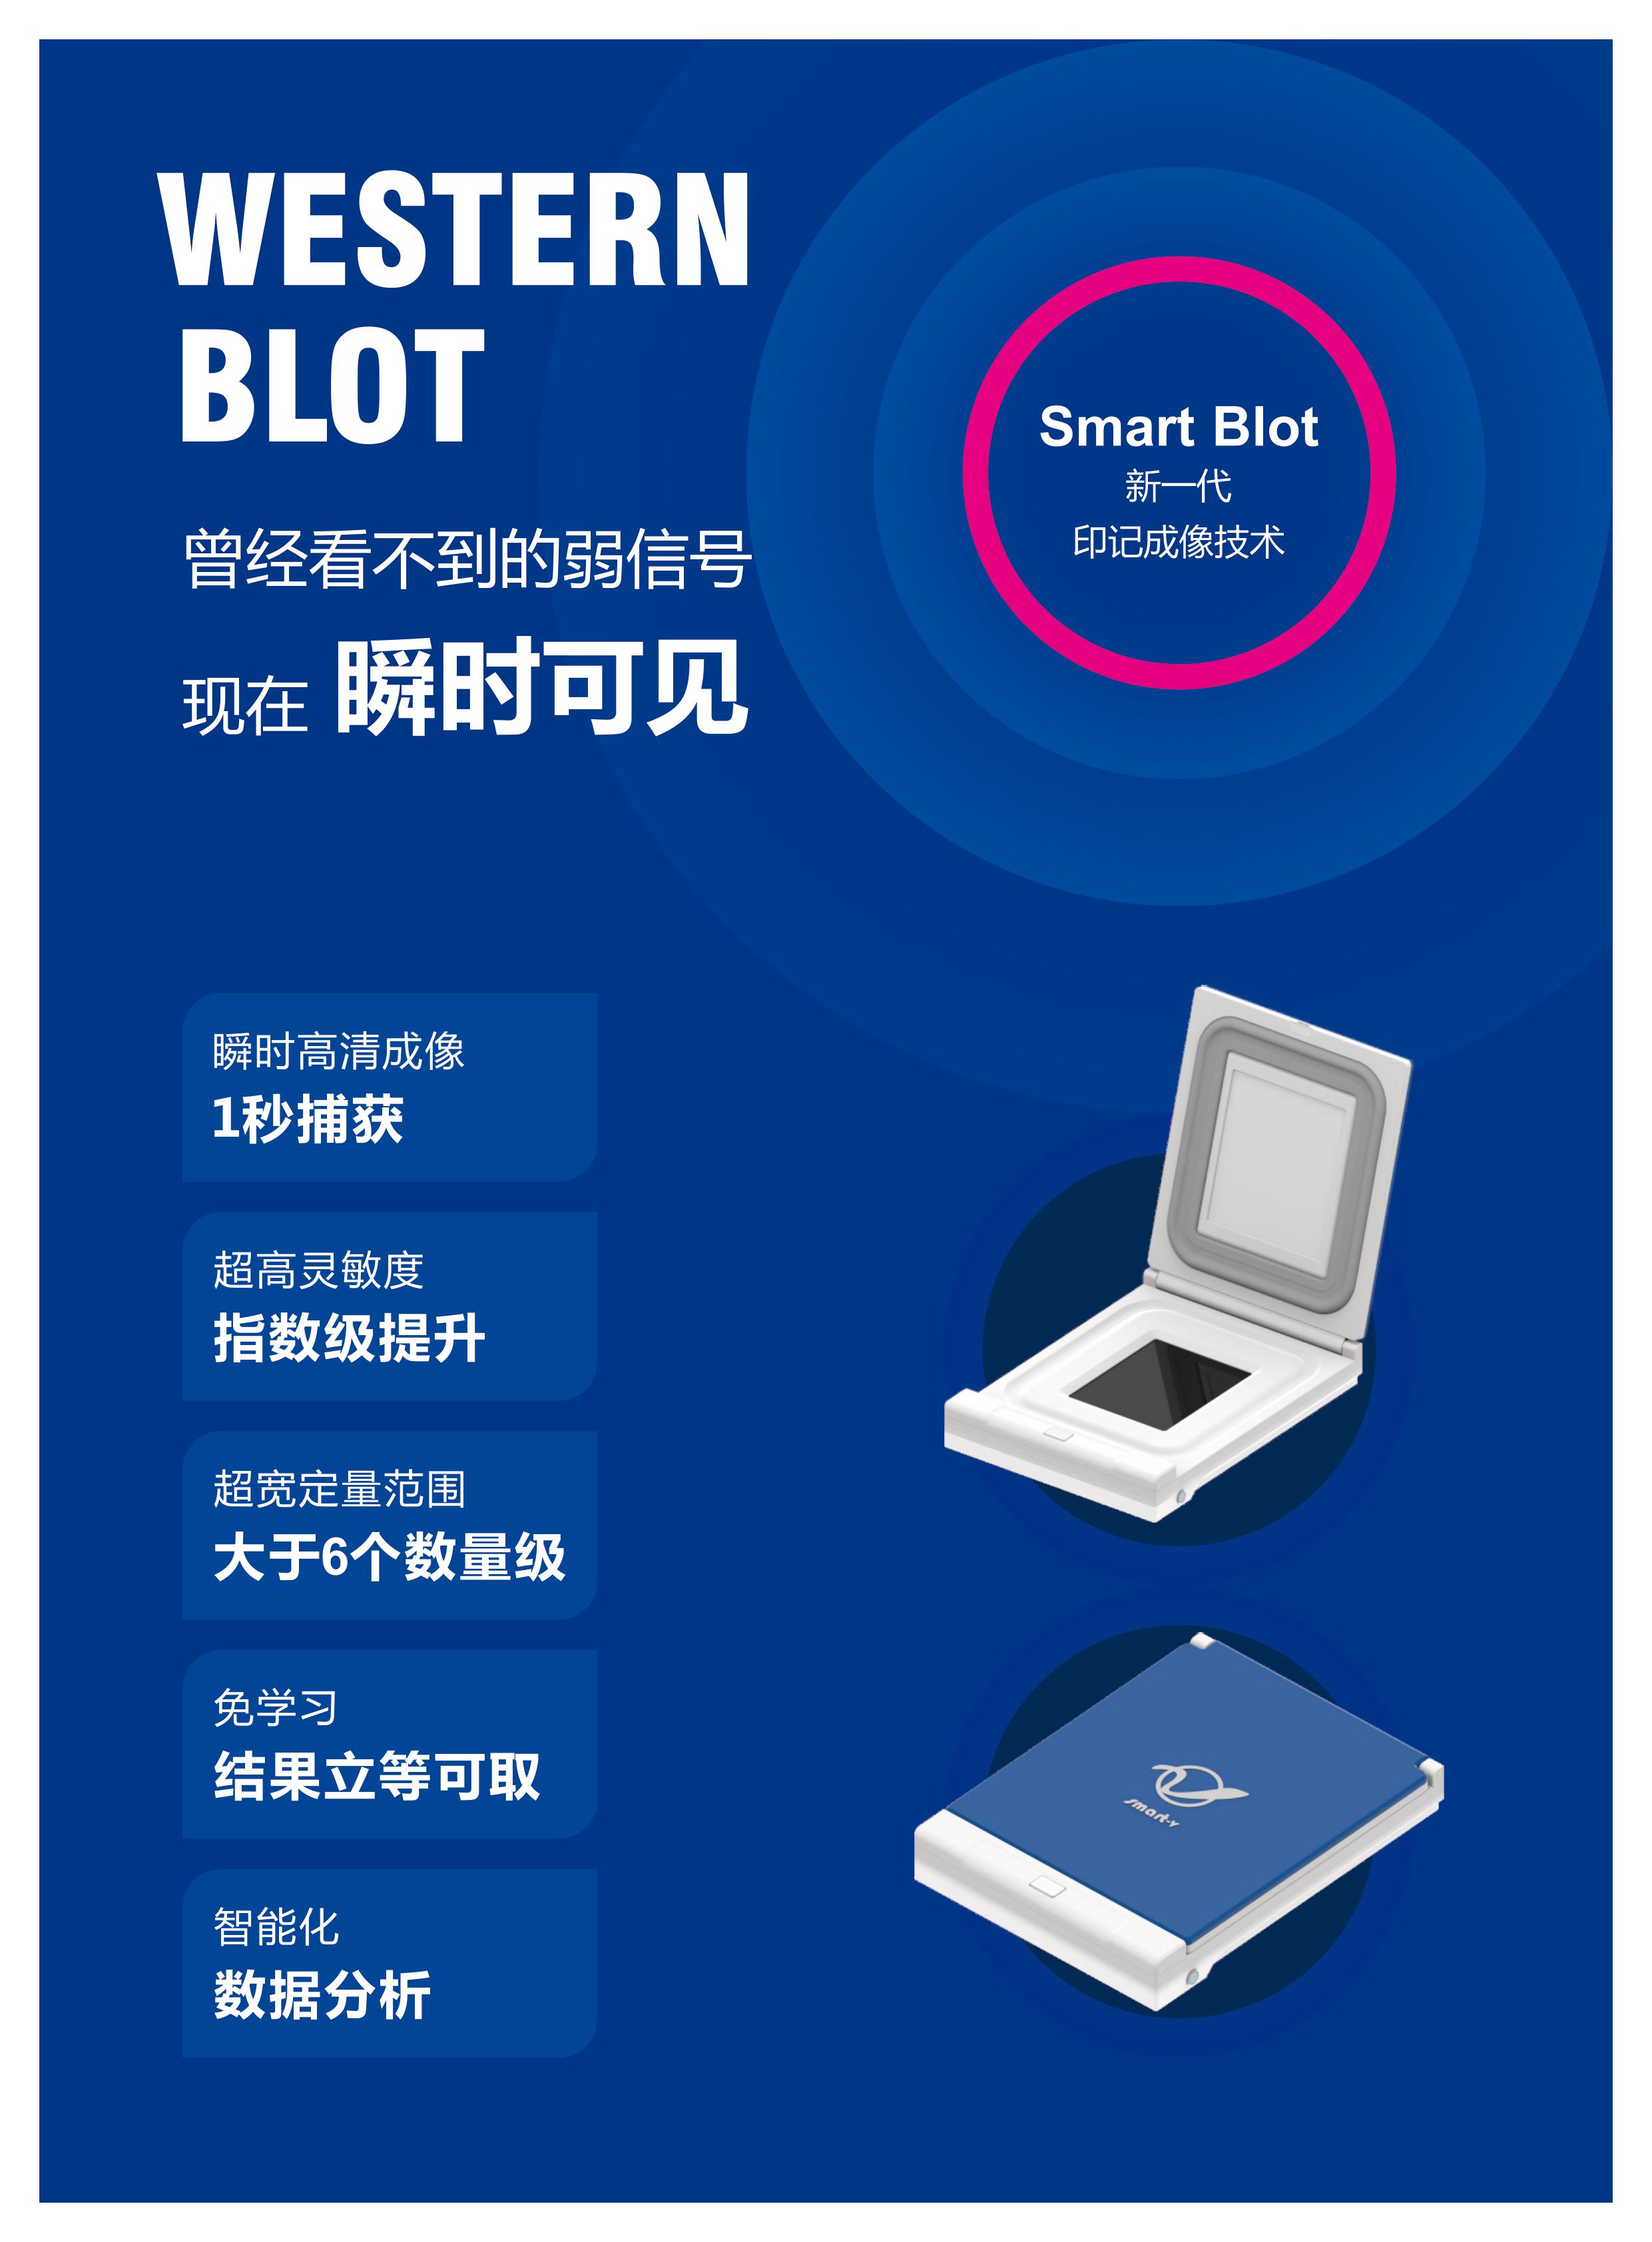 Smart Blot超敏芯片生物定量系统